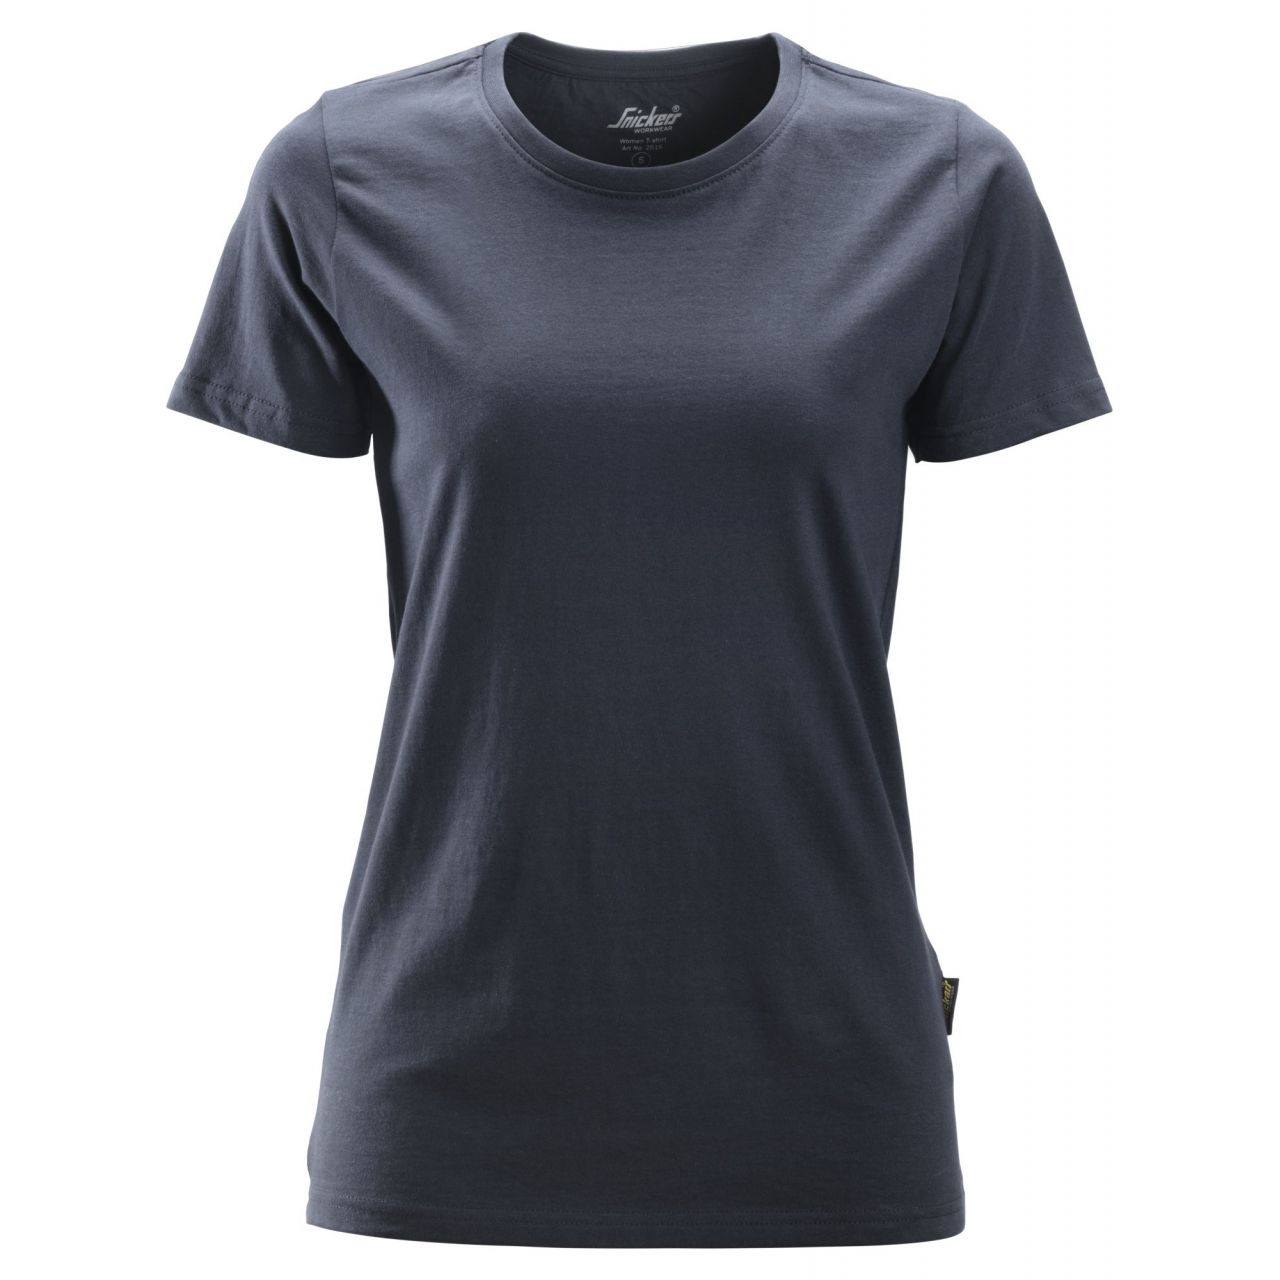 2516 Camiseta Mujer azul marino talla M